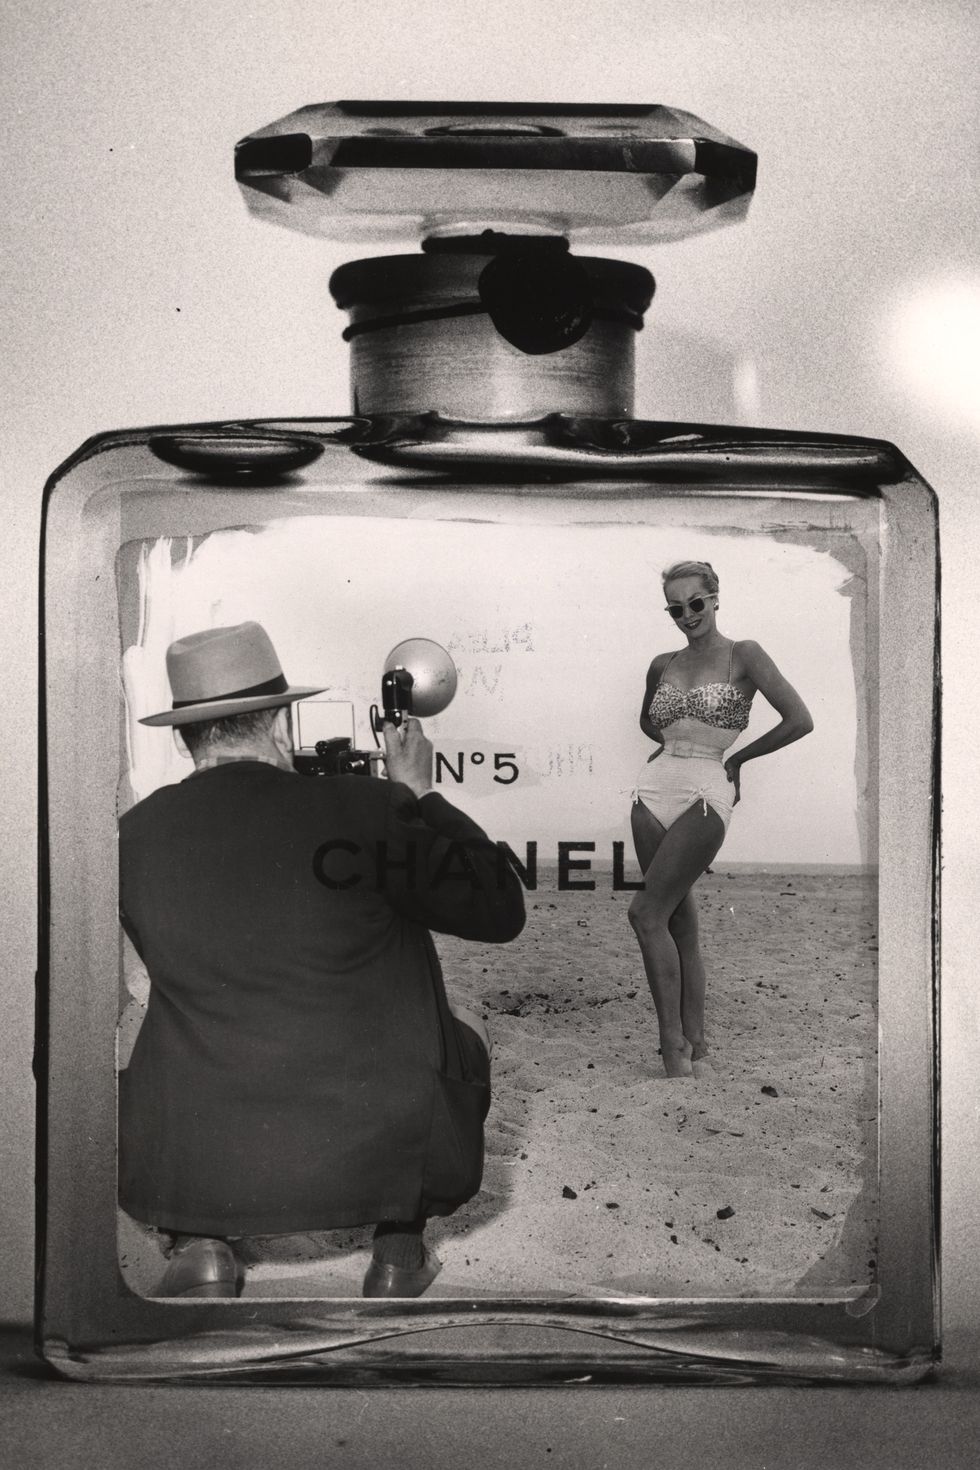 Vintage Chanel 1950s Large Perfume Bottle